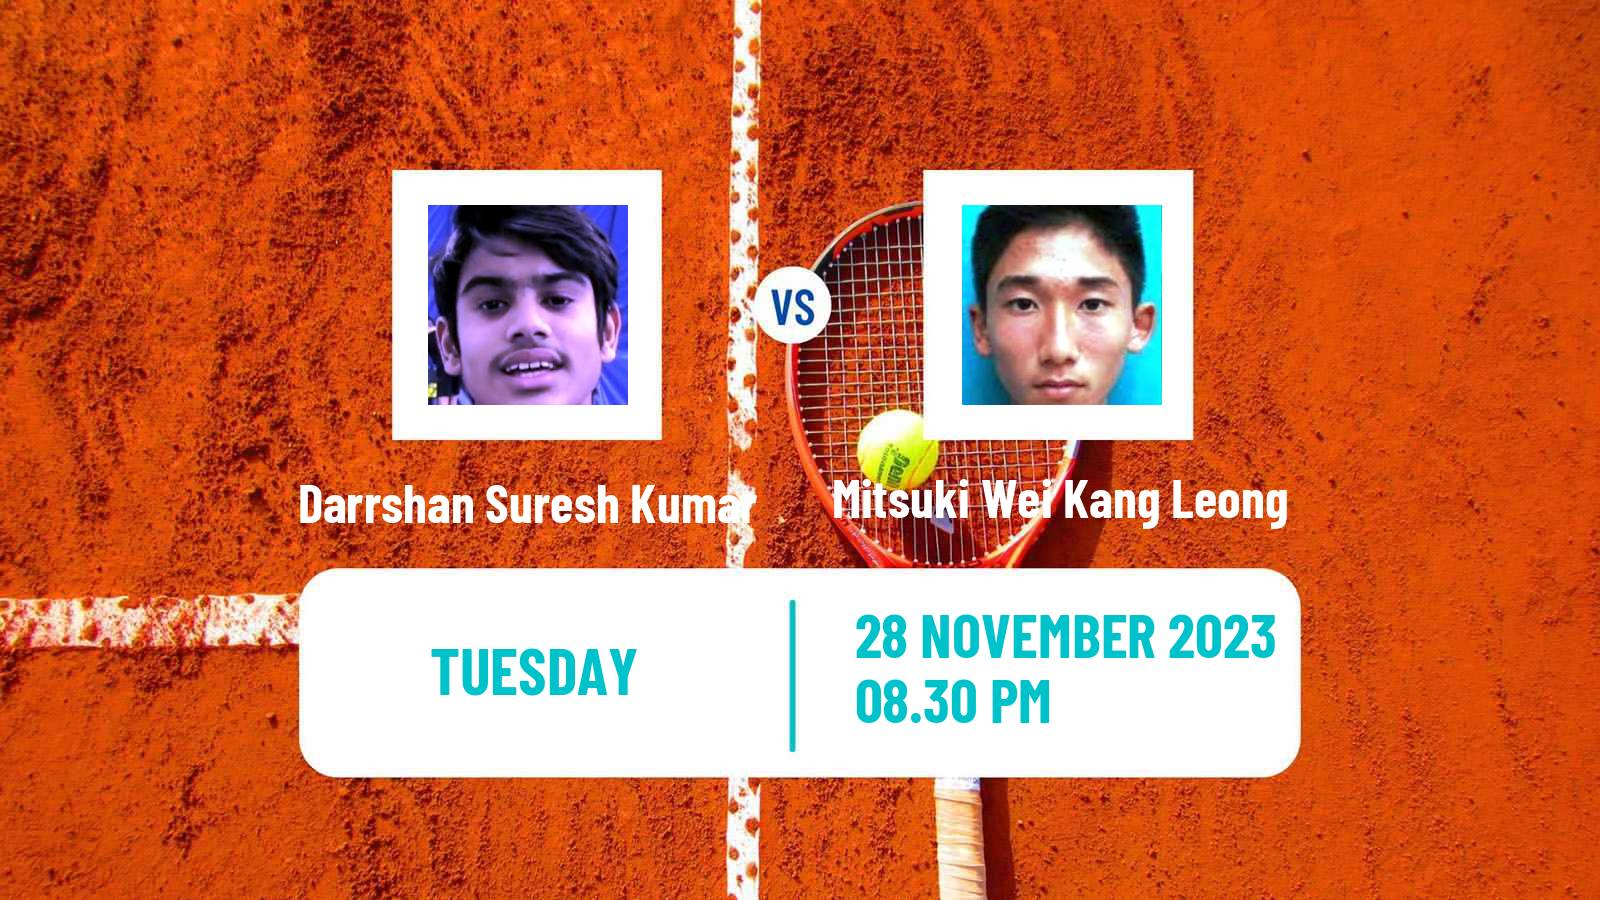 Tennis ITF M15 Kuala Lumpur Men Darrshan Suresh Kumar - Mitsuki Wei Kang Leong